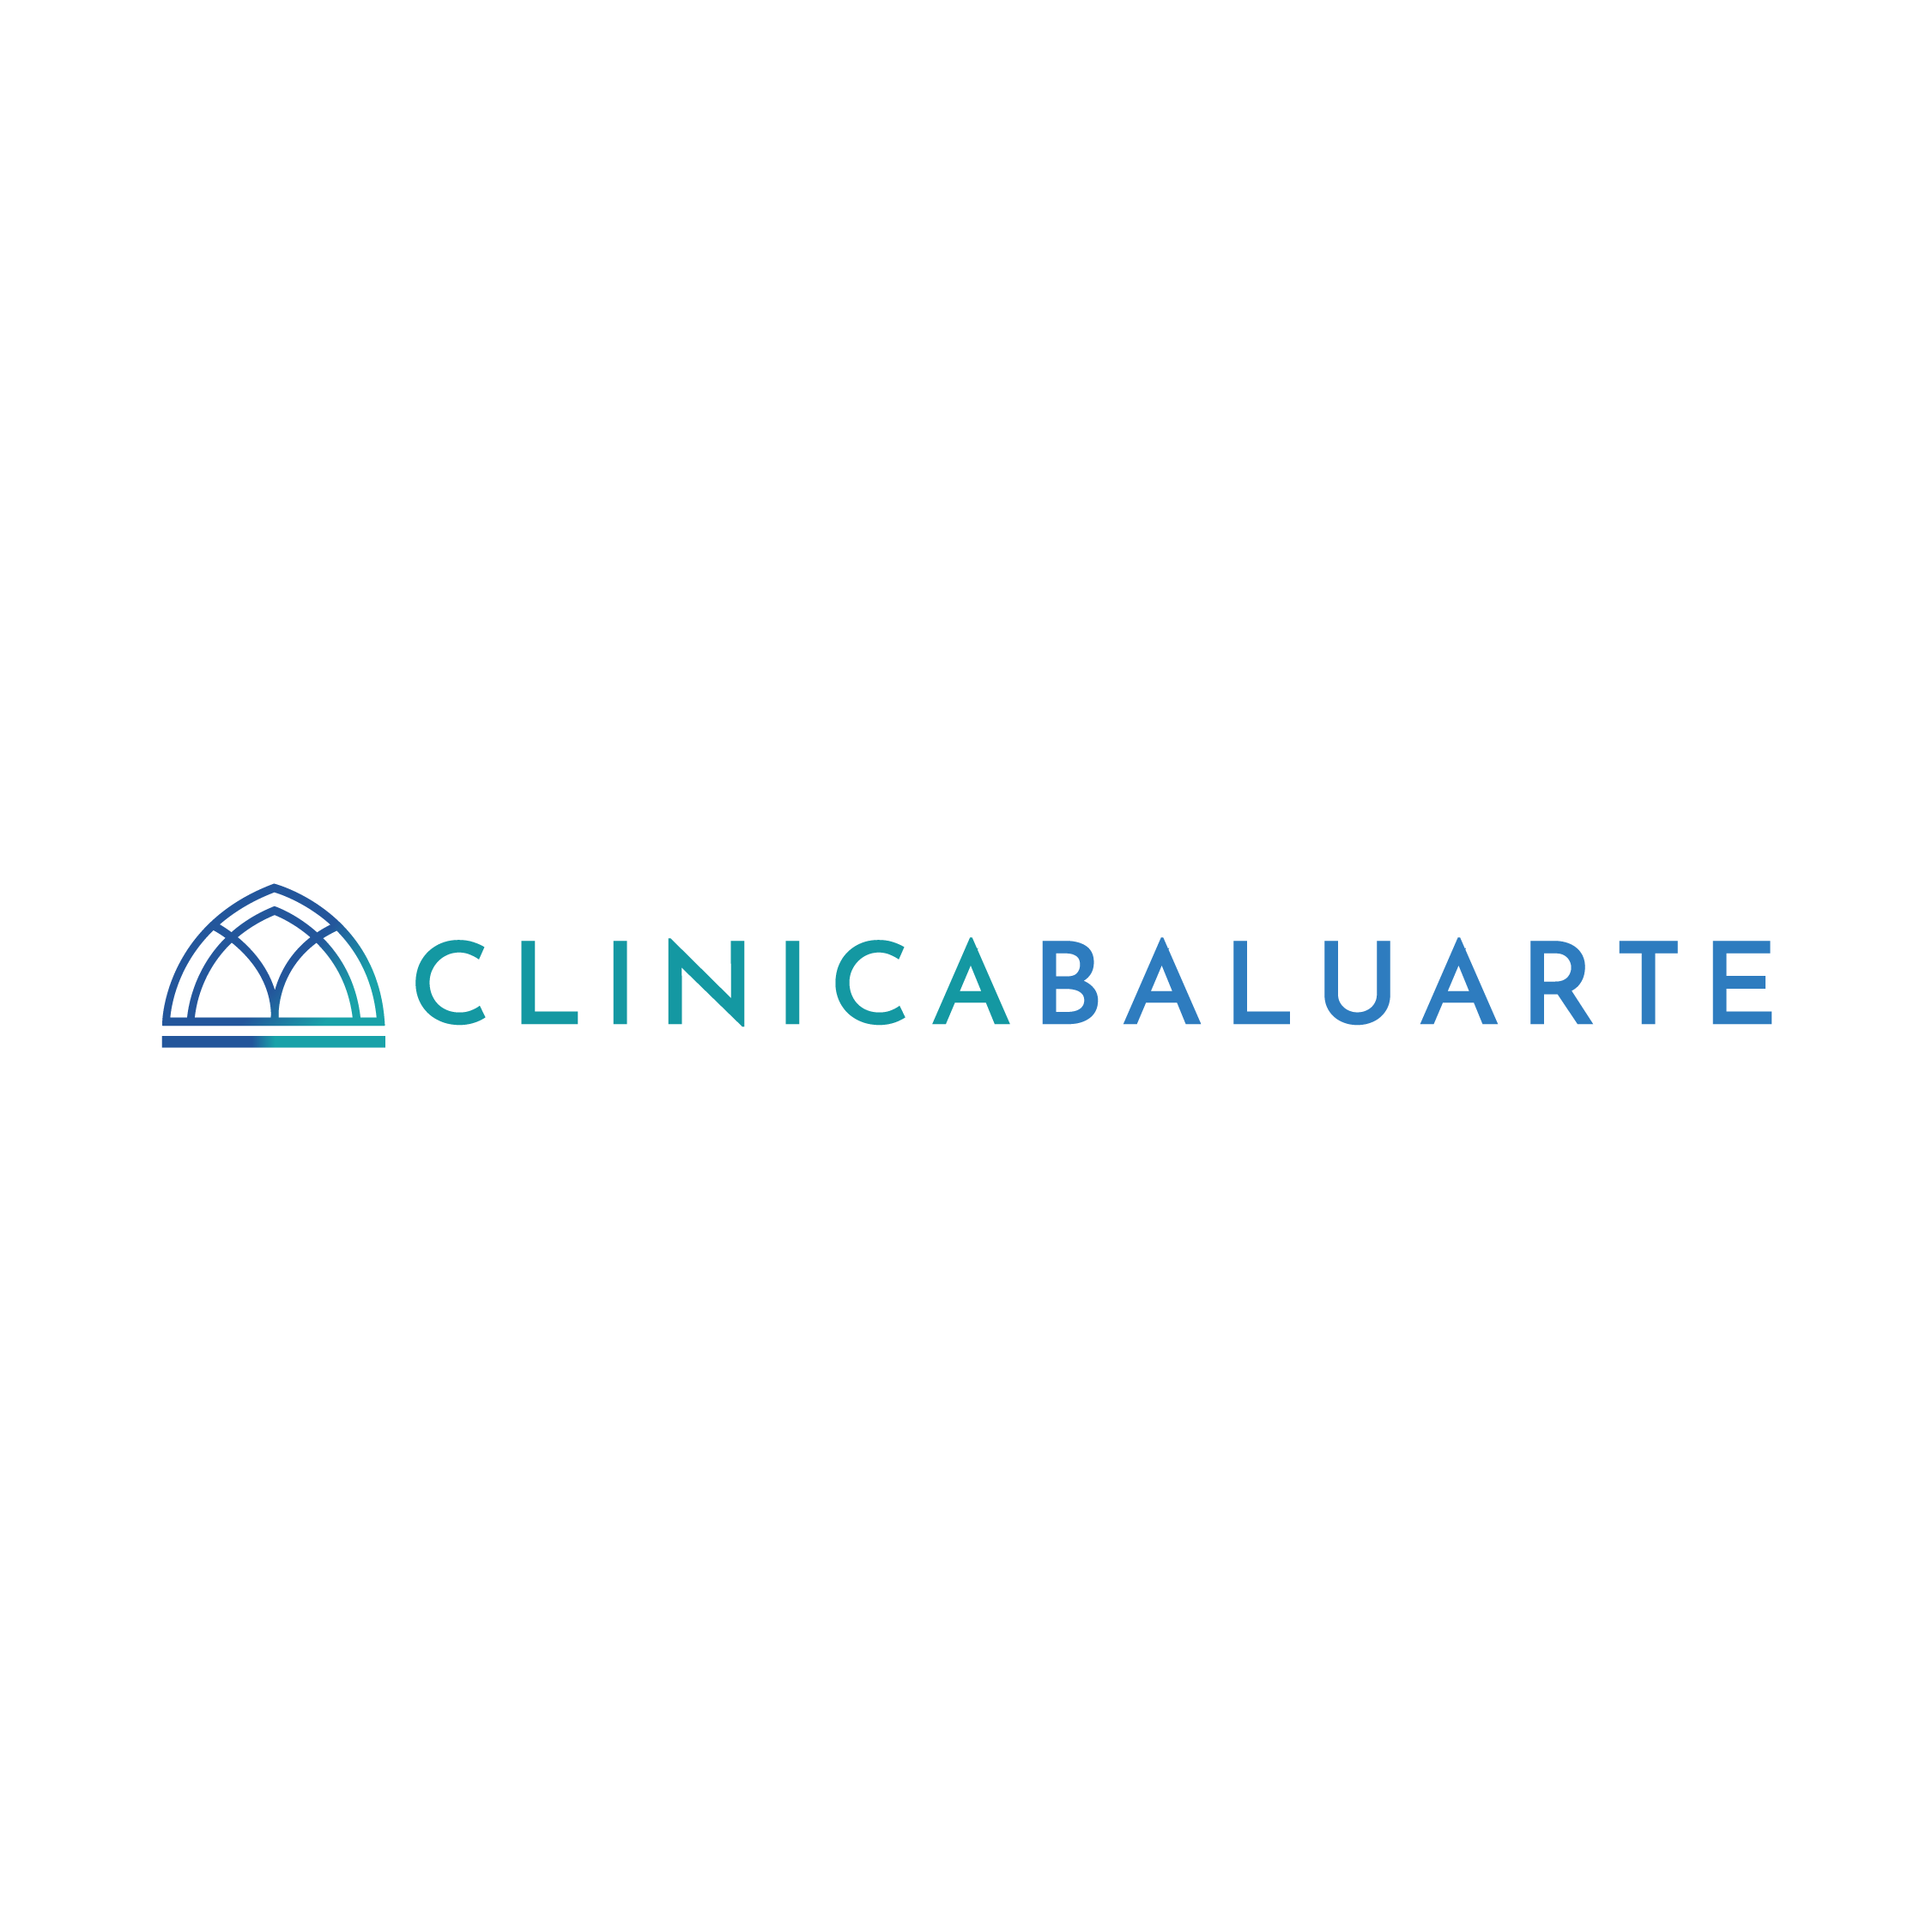 Clínica fisioterapia y podología Baluarte Pamplona - Iruña